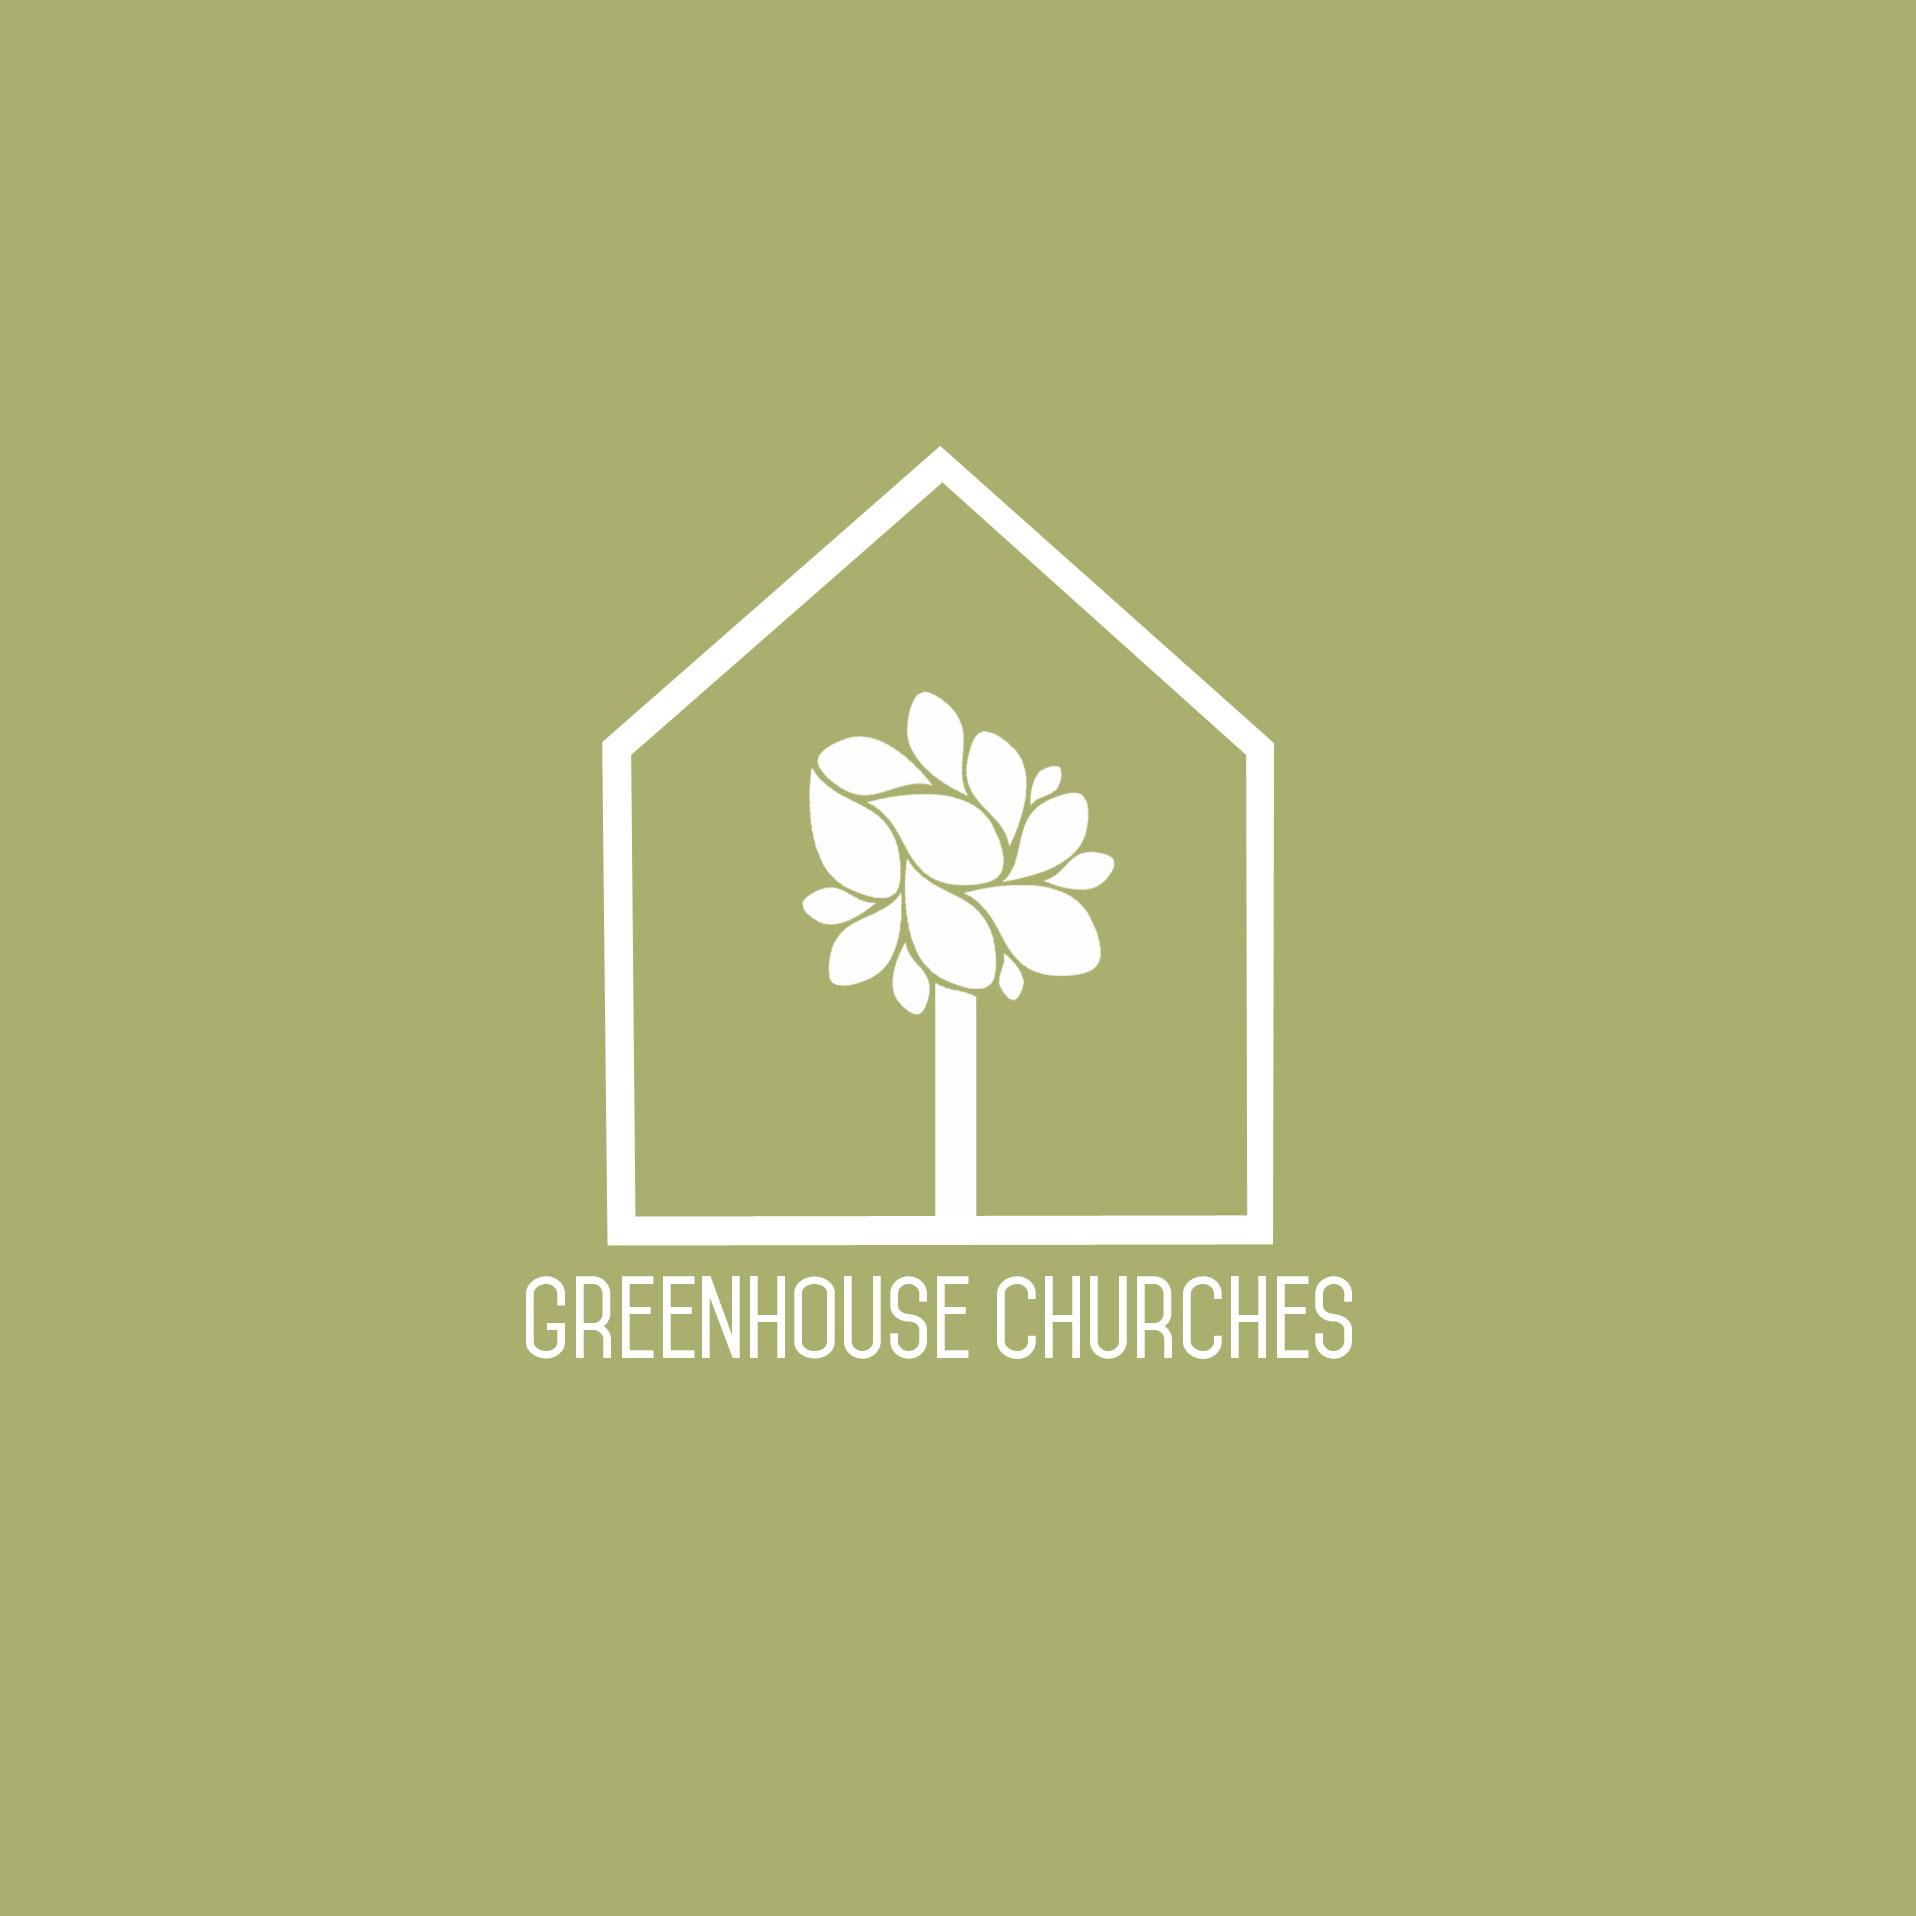 Church Flower Logo - Greenhouse Church(es) Logo copy - The Alliance-South Pacific District